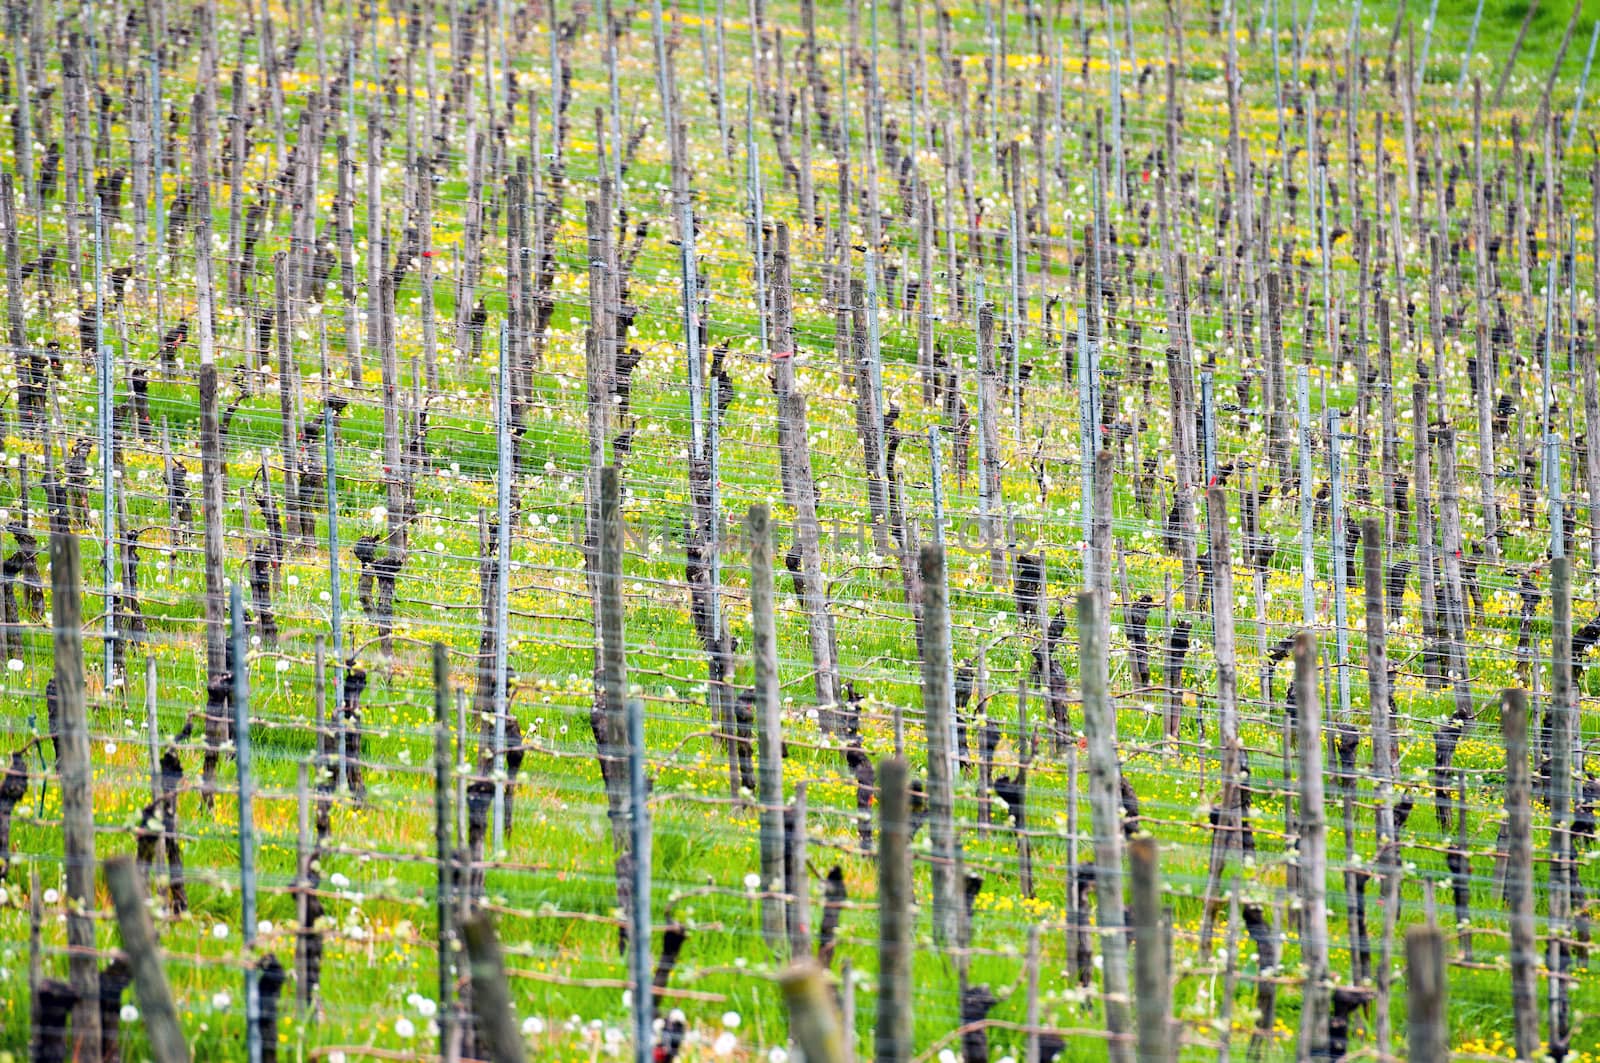 Grape Vines in the Vineyard Field in Spring